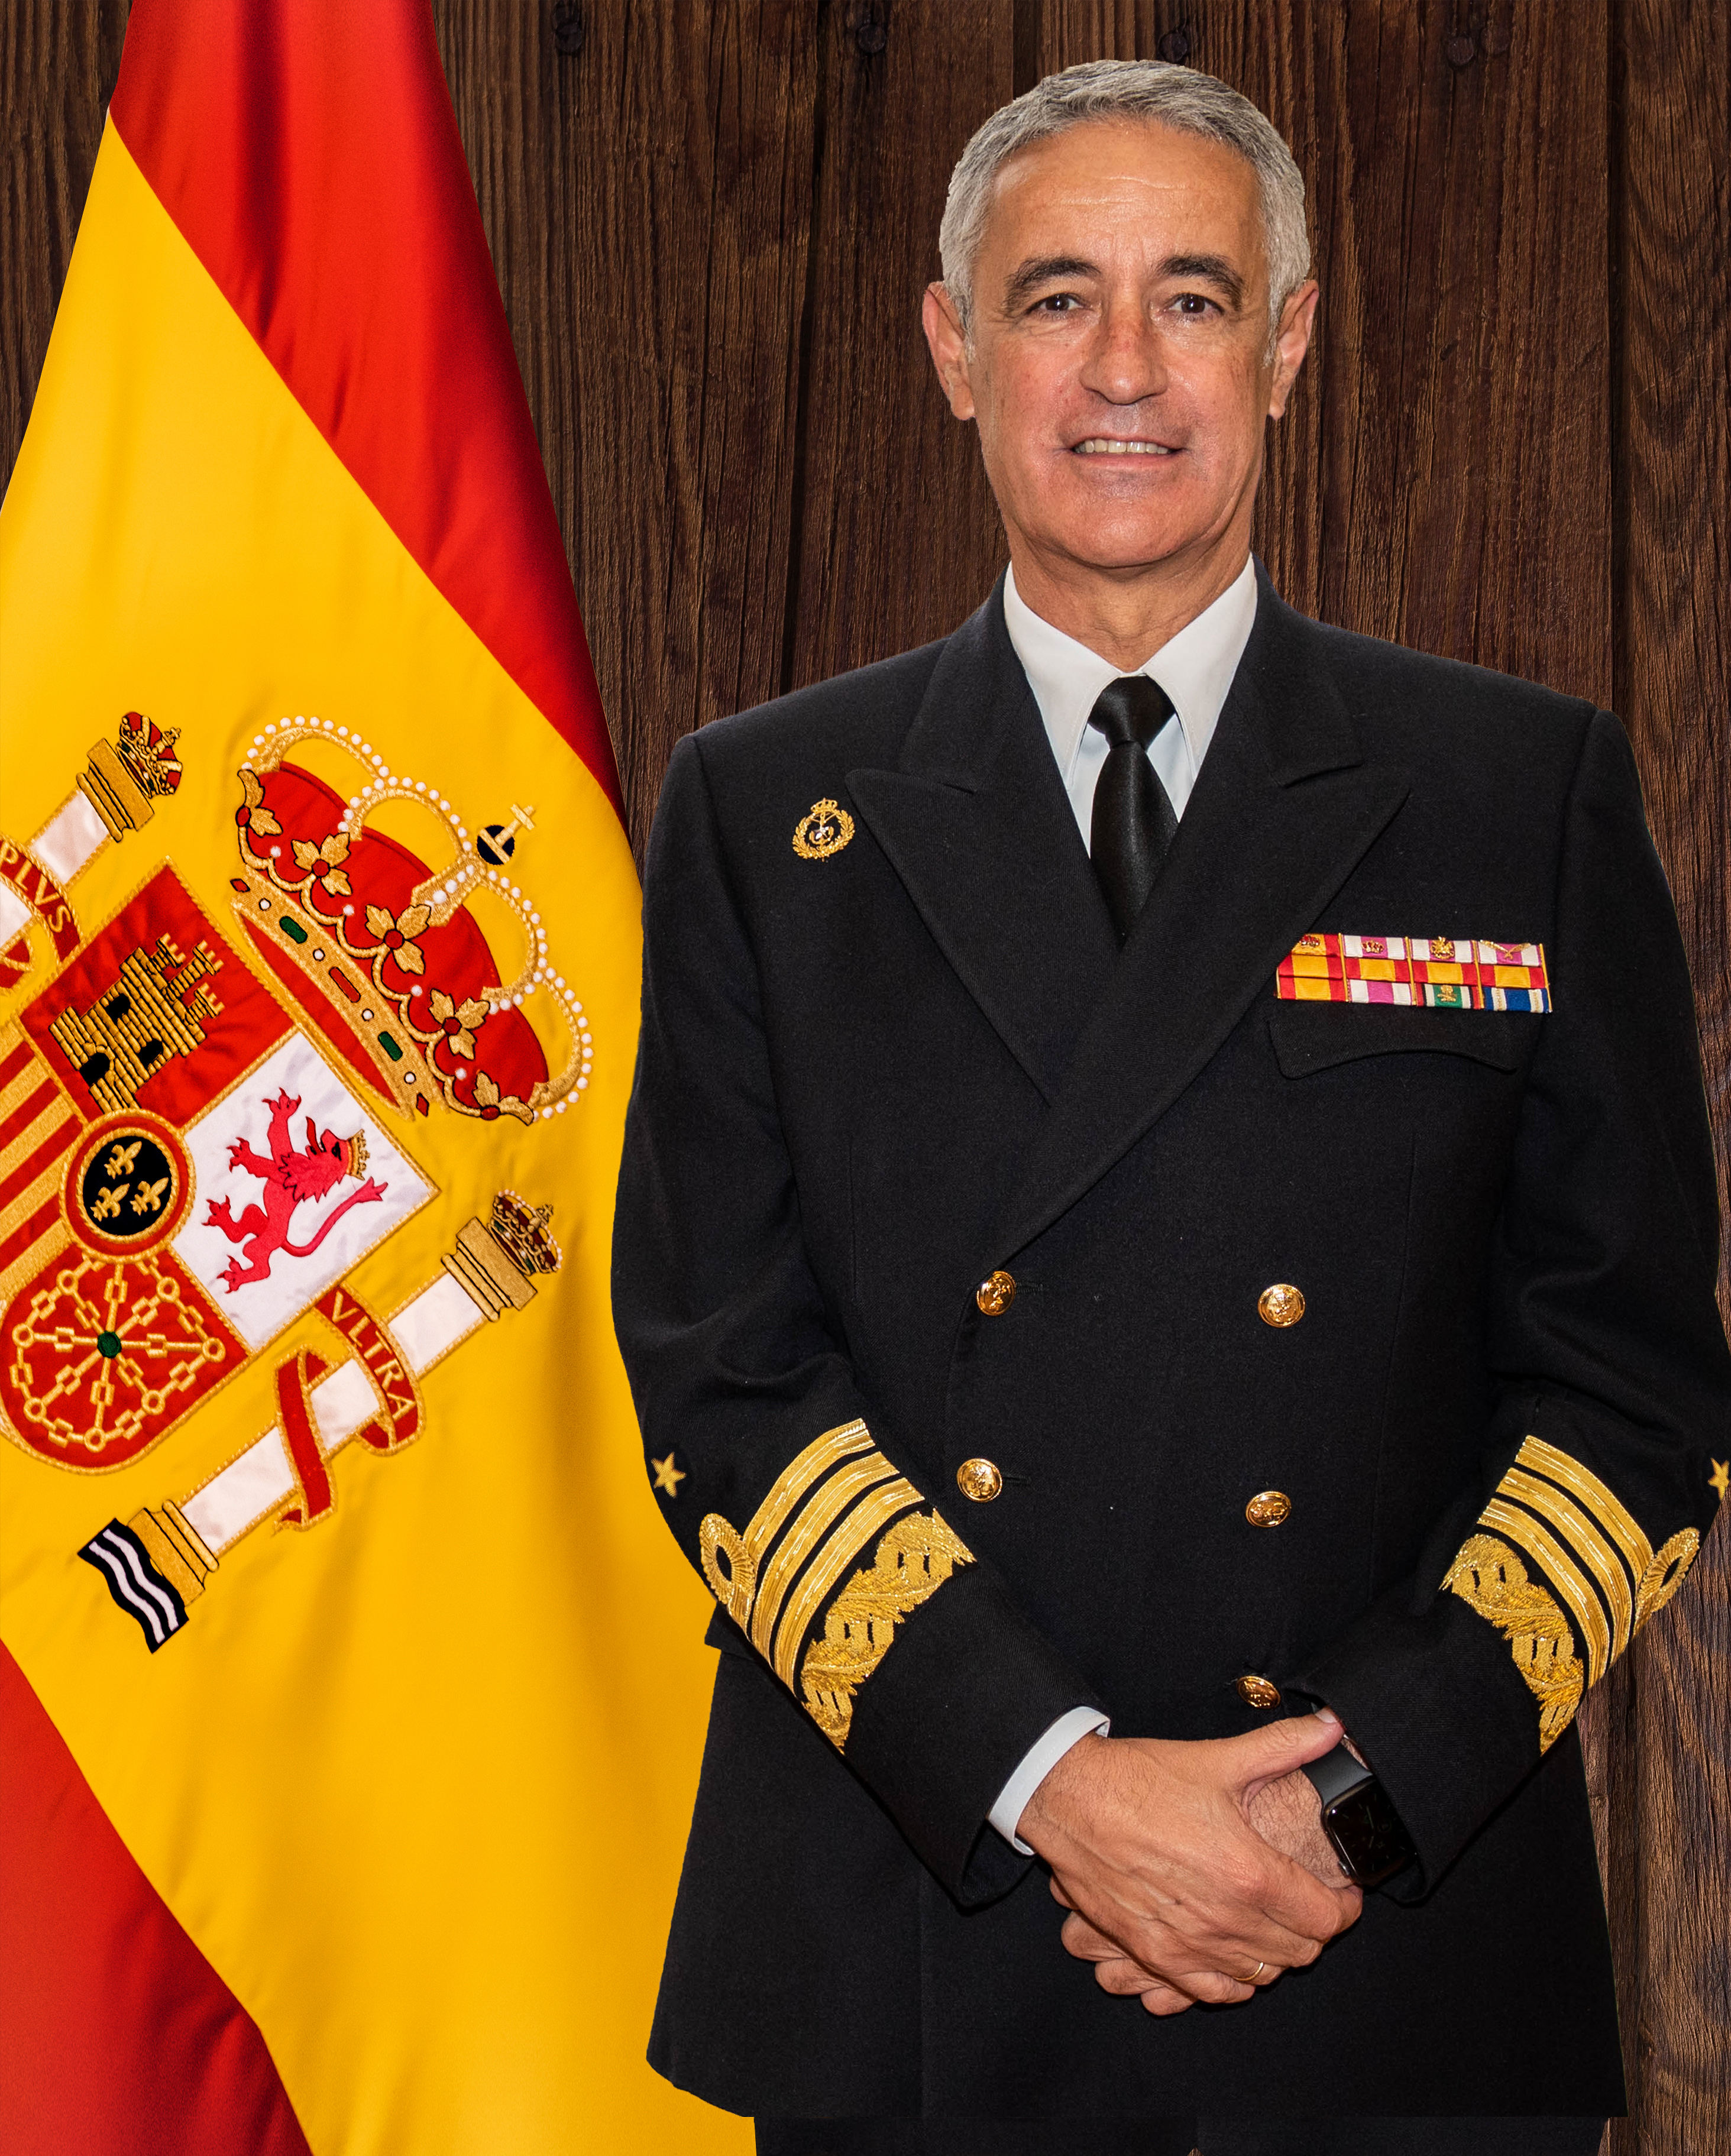 Almirante General Antonio Piñeiro Sánchez